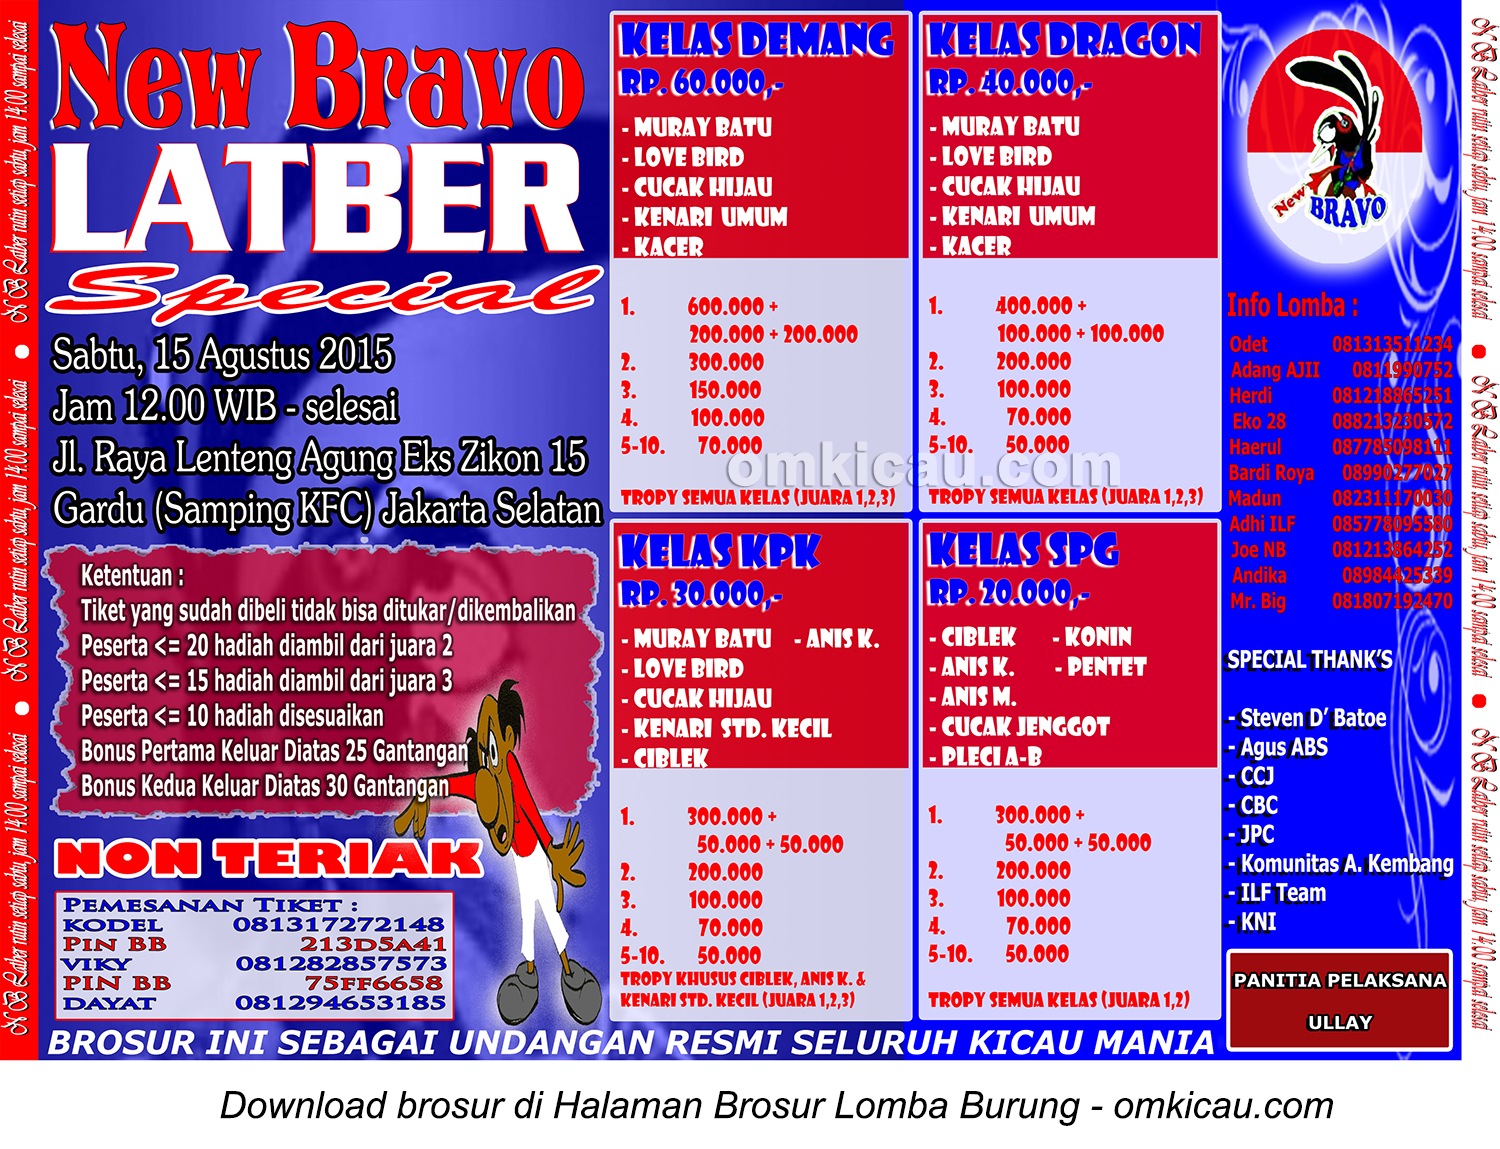 Brosur Latber Special New Bravo, Jakarta Selatan, 15 Agustus 2015